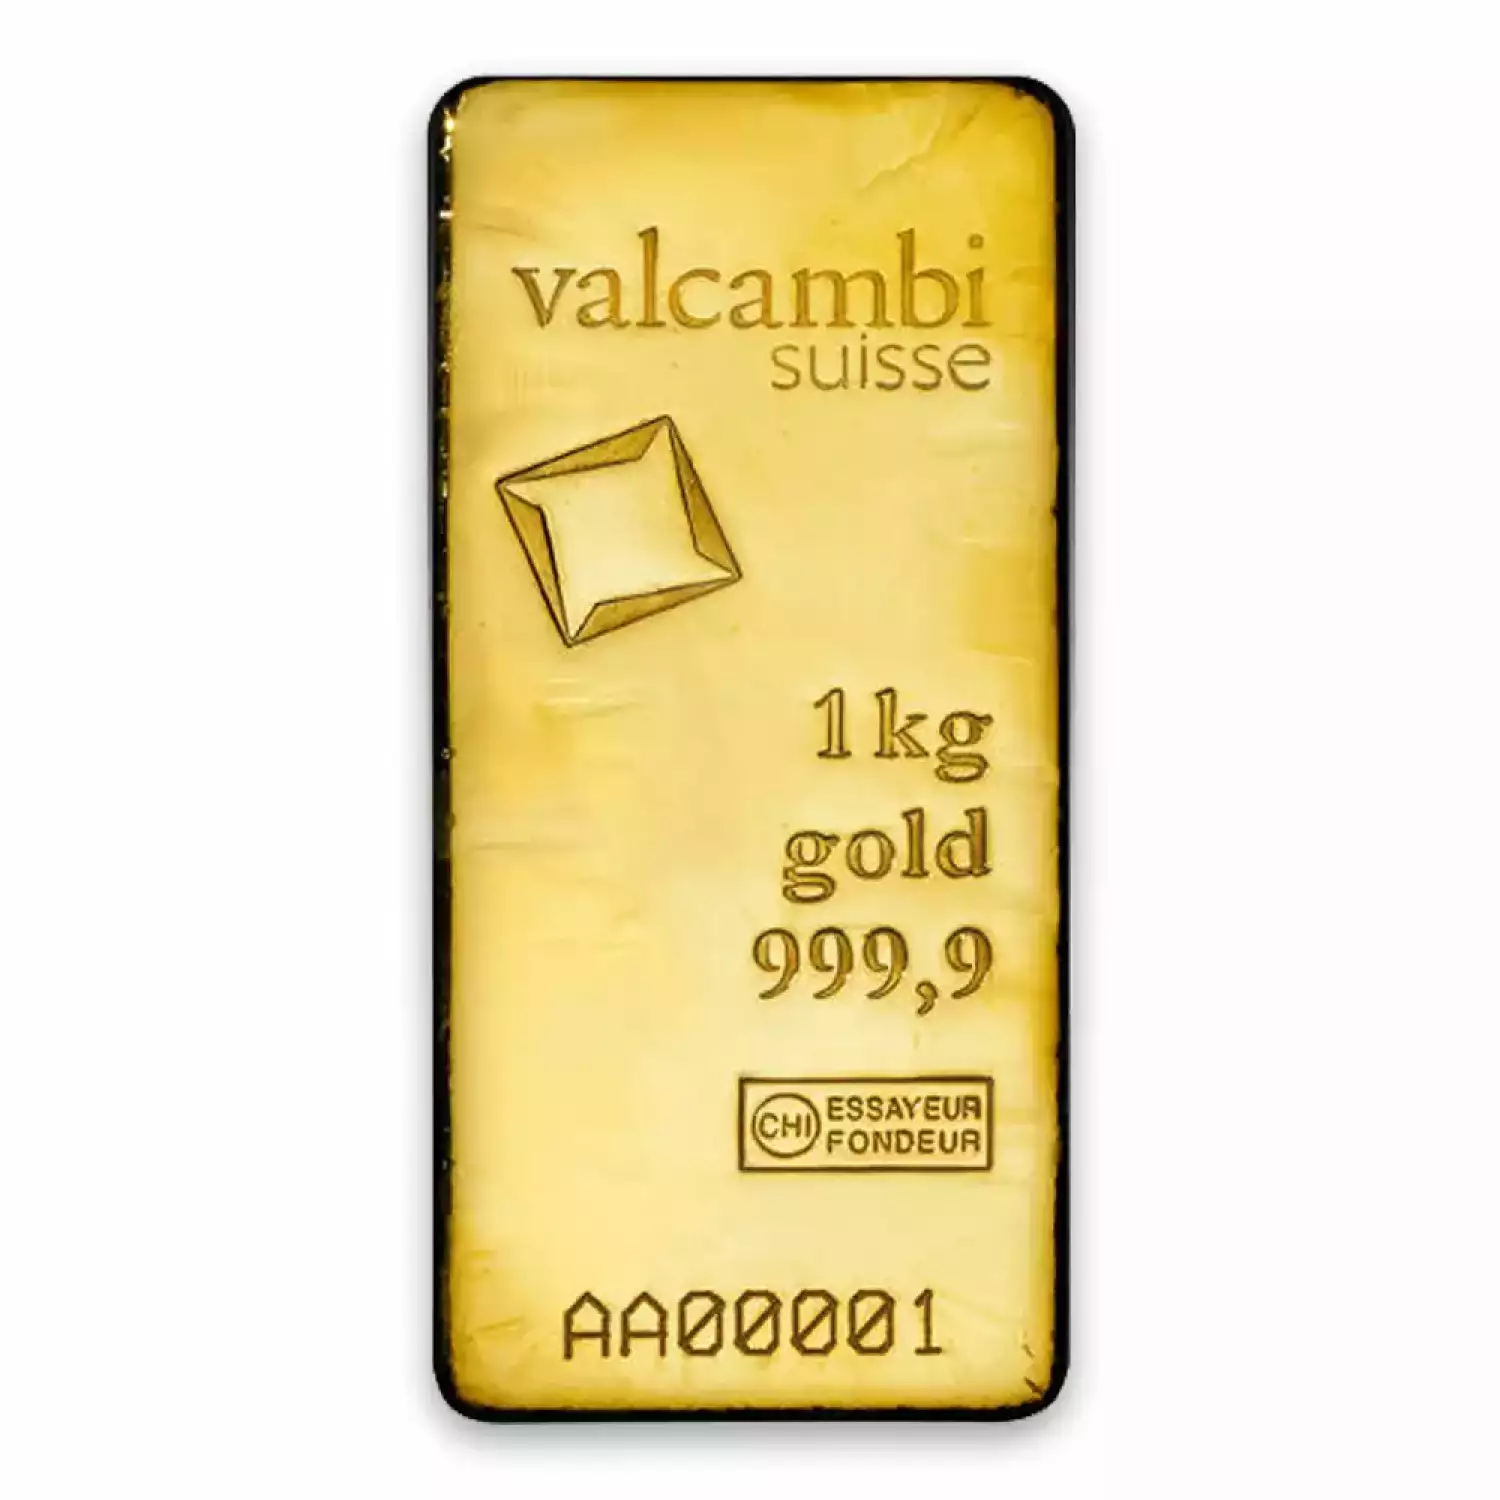 1 kg Valcambi Cast Gold Bar (2)